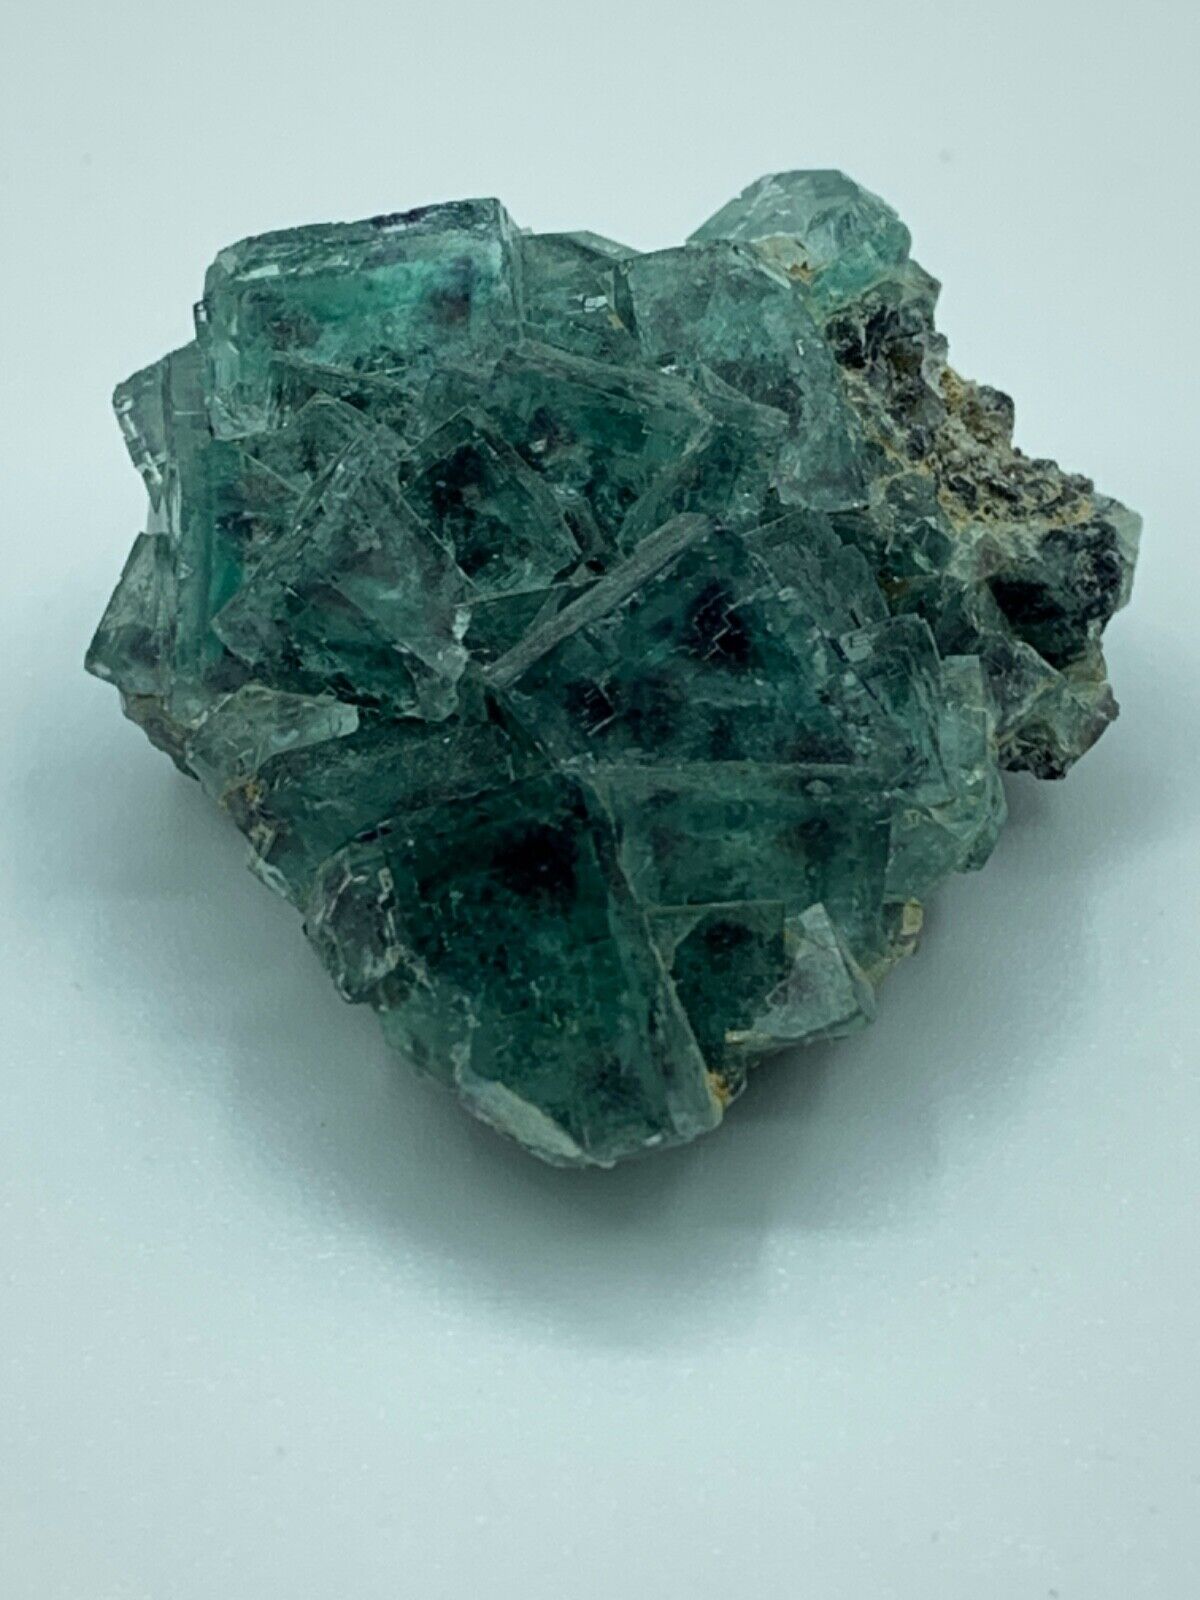 Fluorite with dice phantoms - Okorusu Mine, Namibia